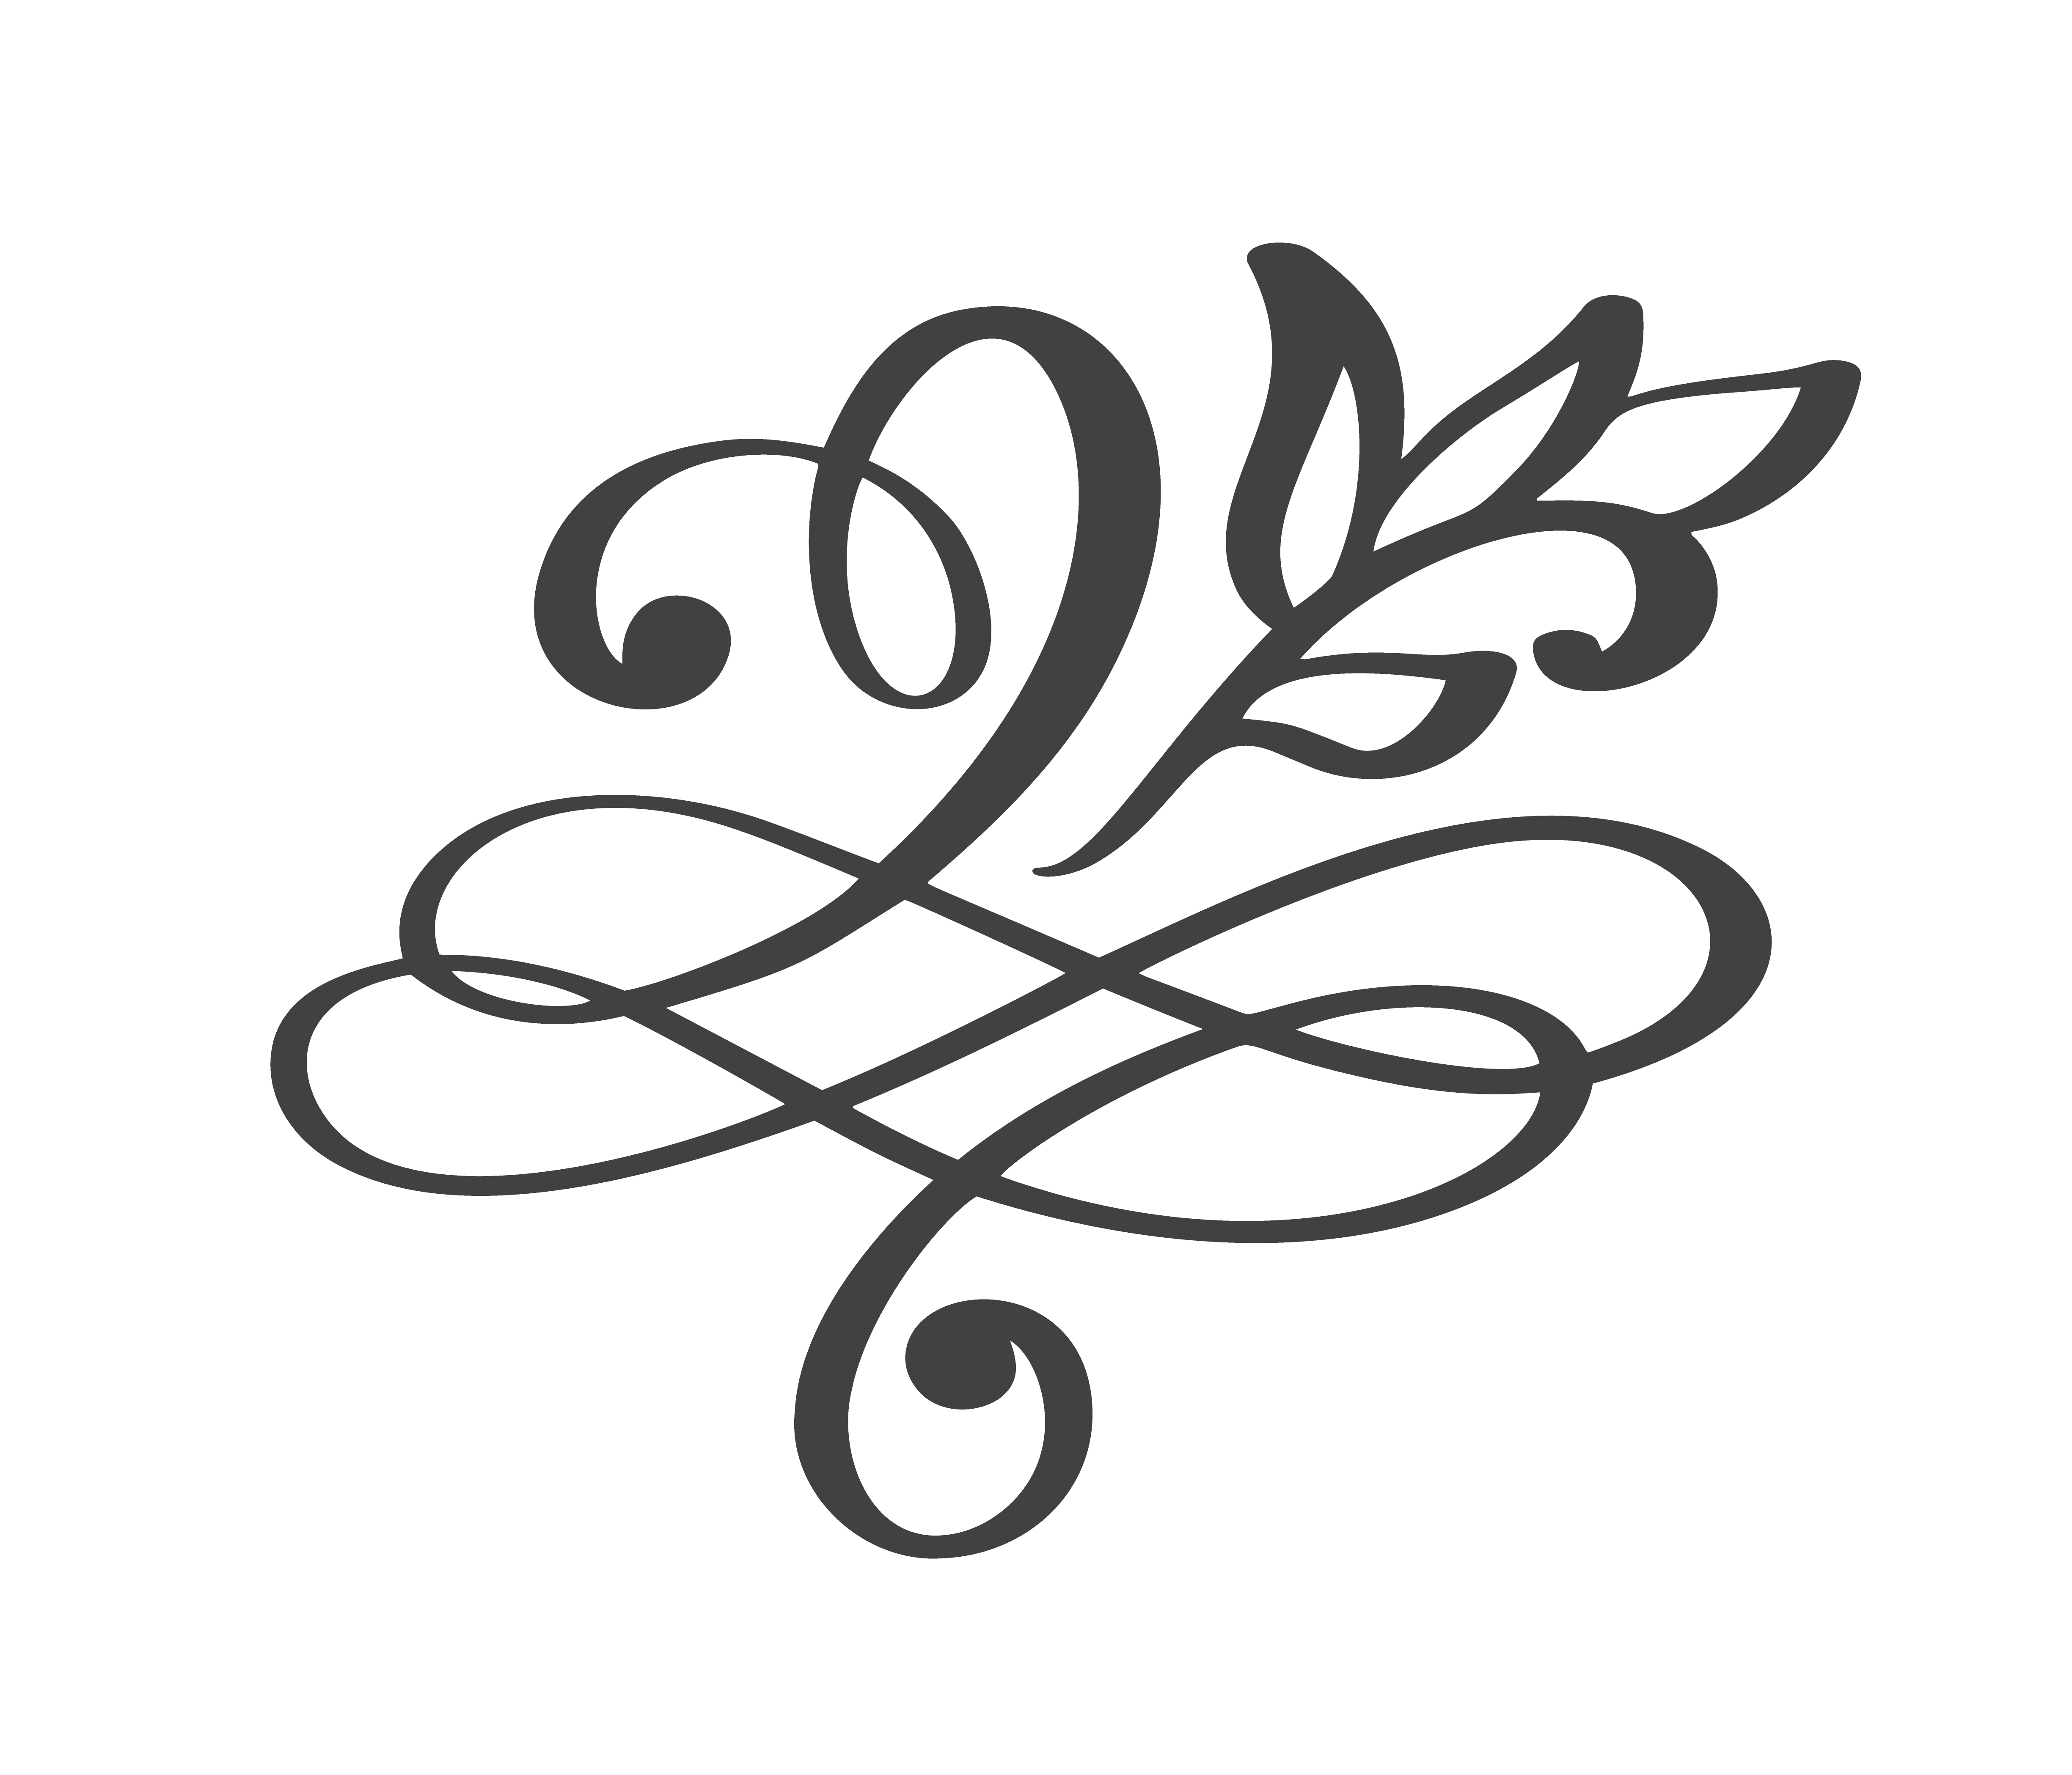 hand drawn flourish Calligraphy elements. Vector